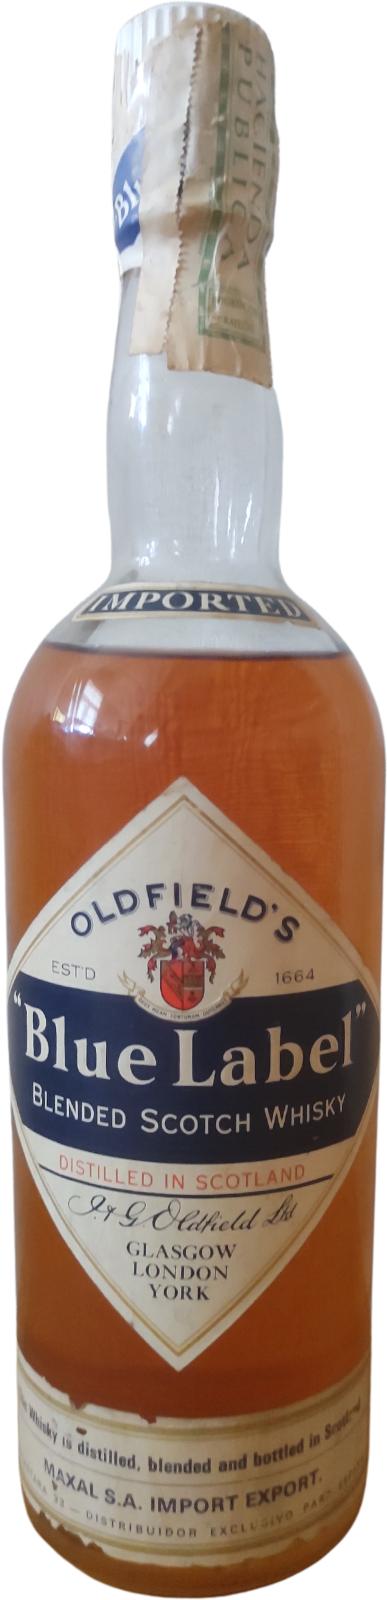 Oldfield's Blue Label Blended Scotch Whisky